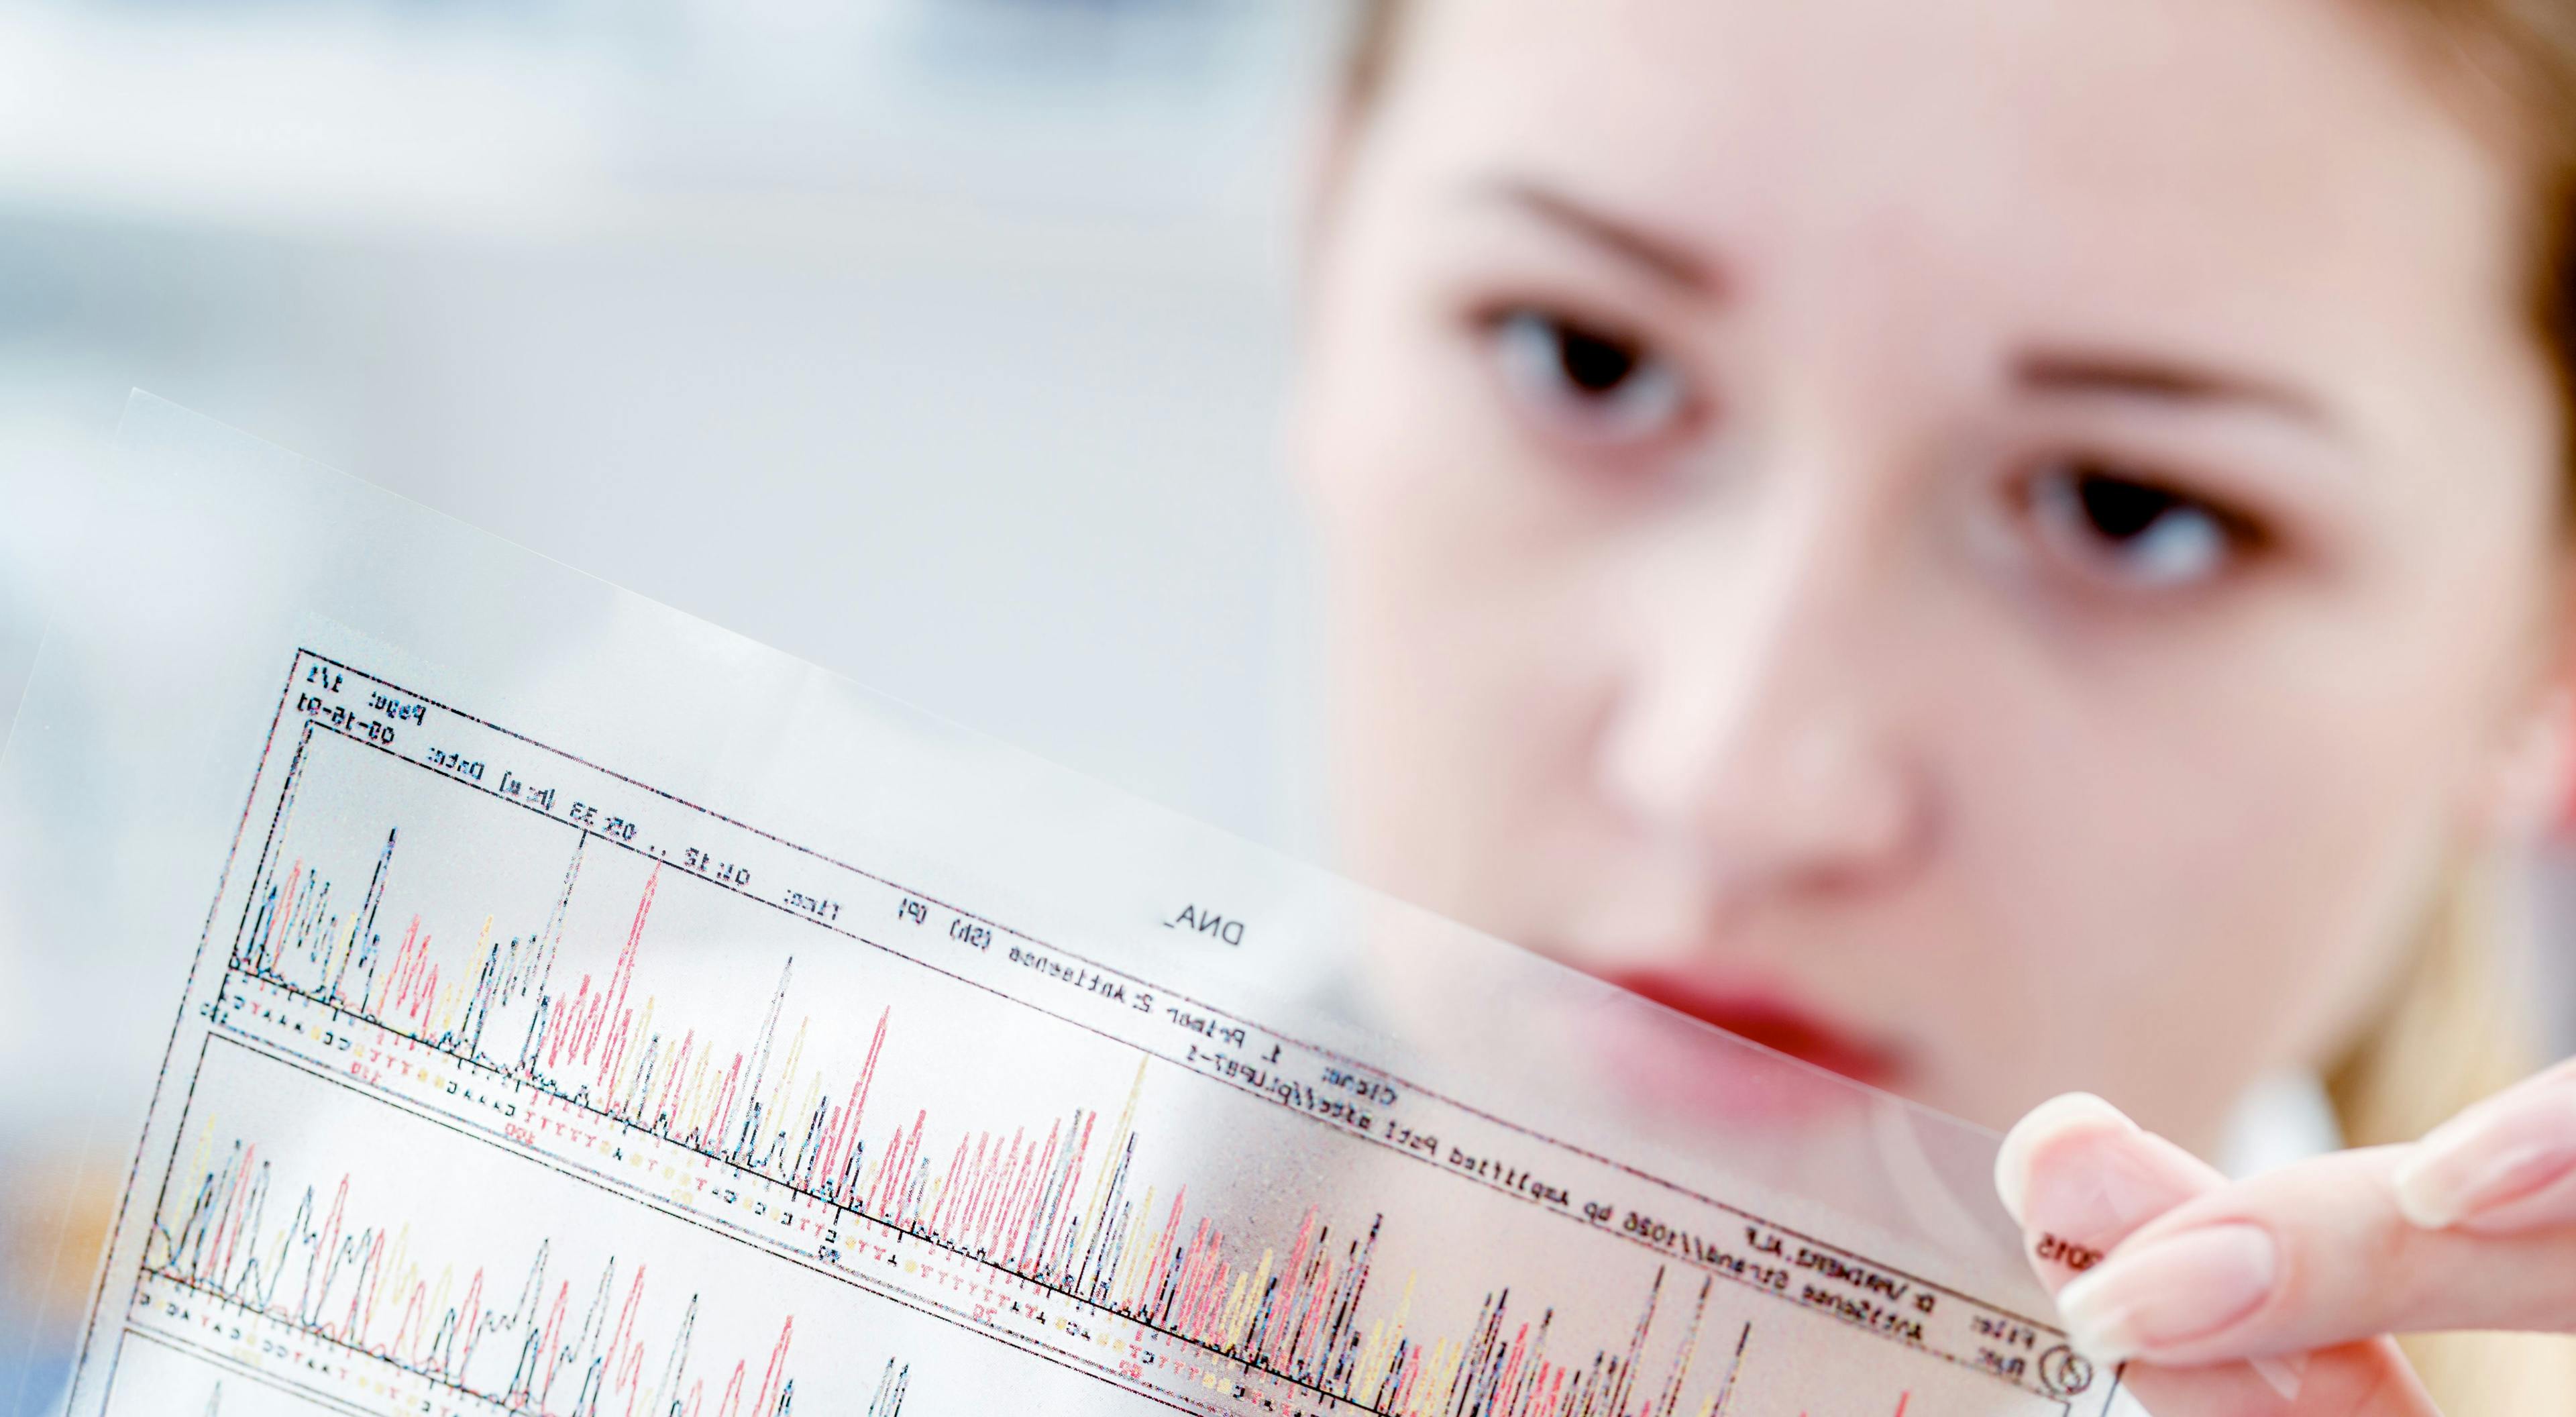 woman examining DNA sequence